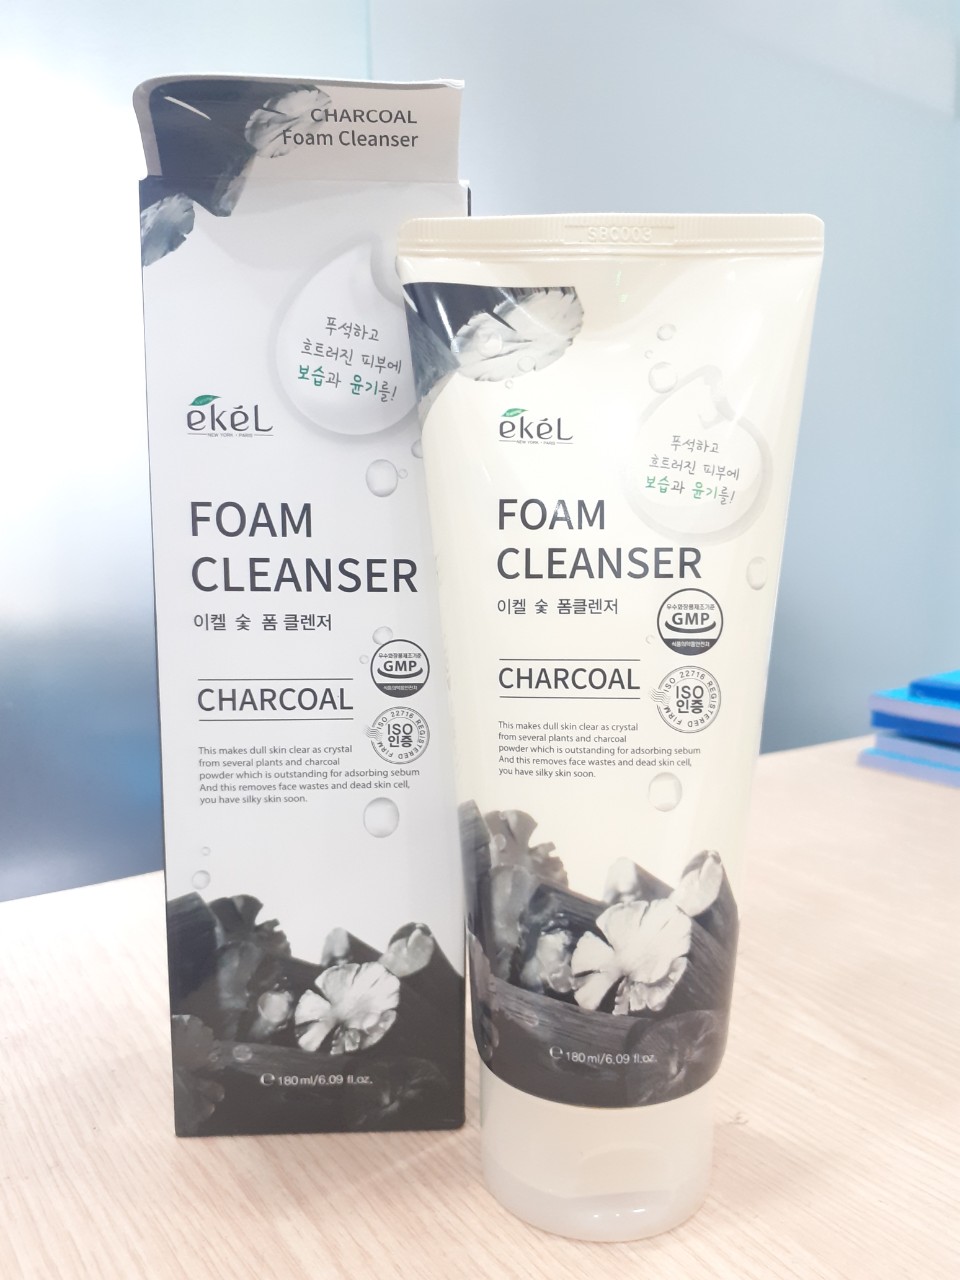 Sữa rửa mặt chiết xuất Than hoạt tính - Ekel Foam Cleanser Charcoal 180ml (Tặng 2 mặt nạ Jant Blanc)